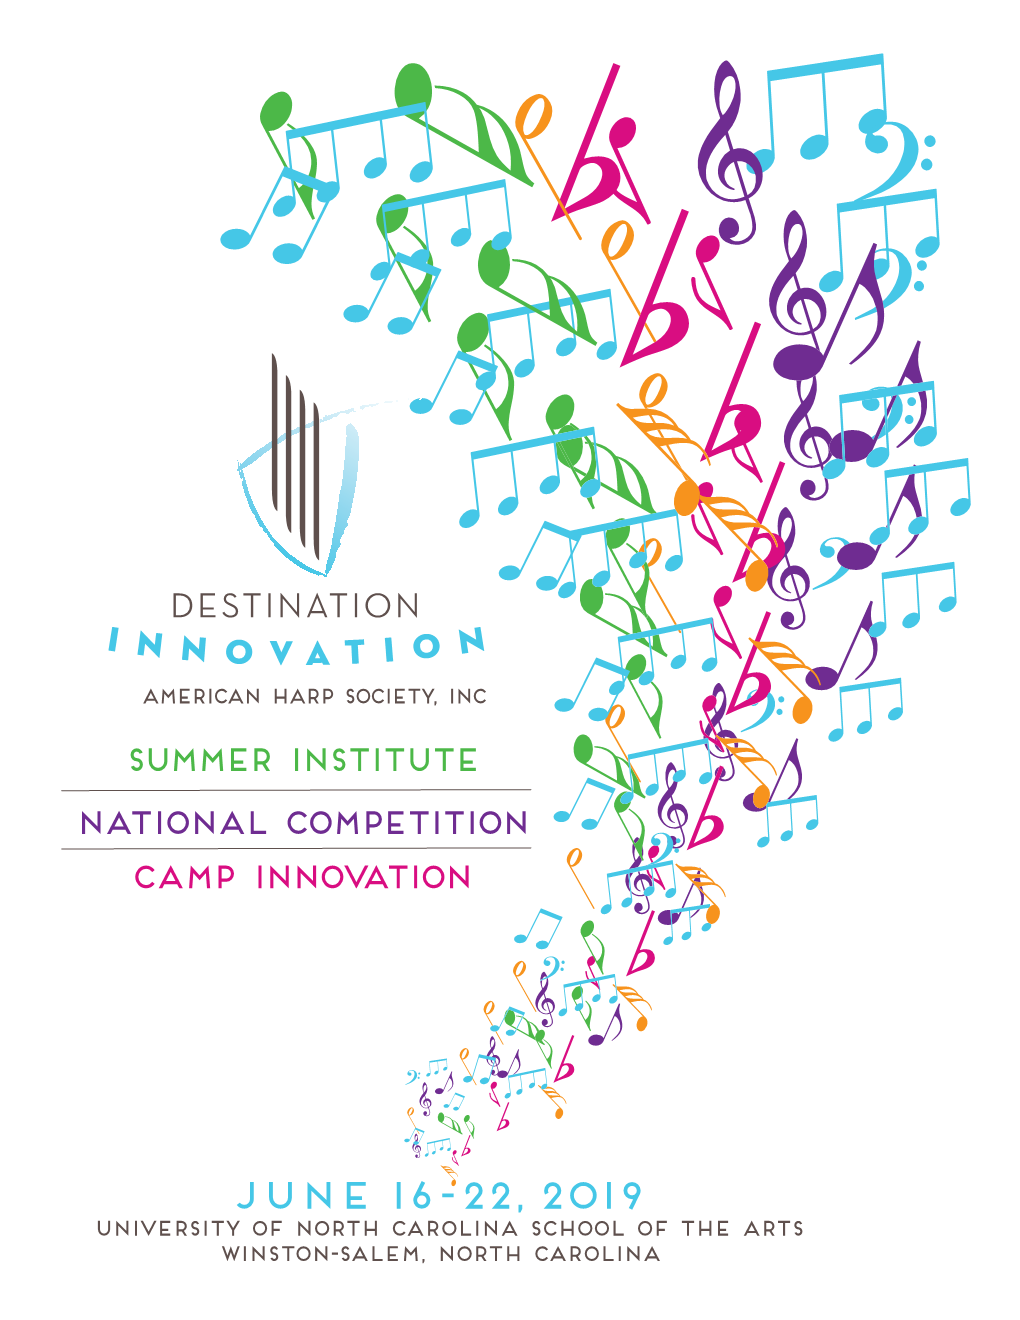 JUNE 16-22, 2019 University of North Carolina School of the Arts Winston-Salem, North Carolina